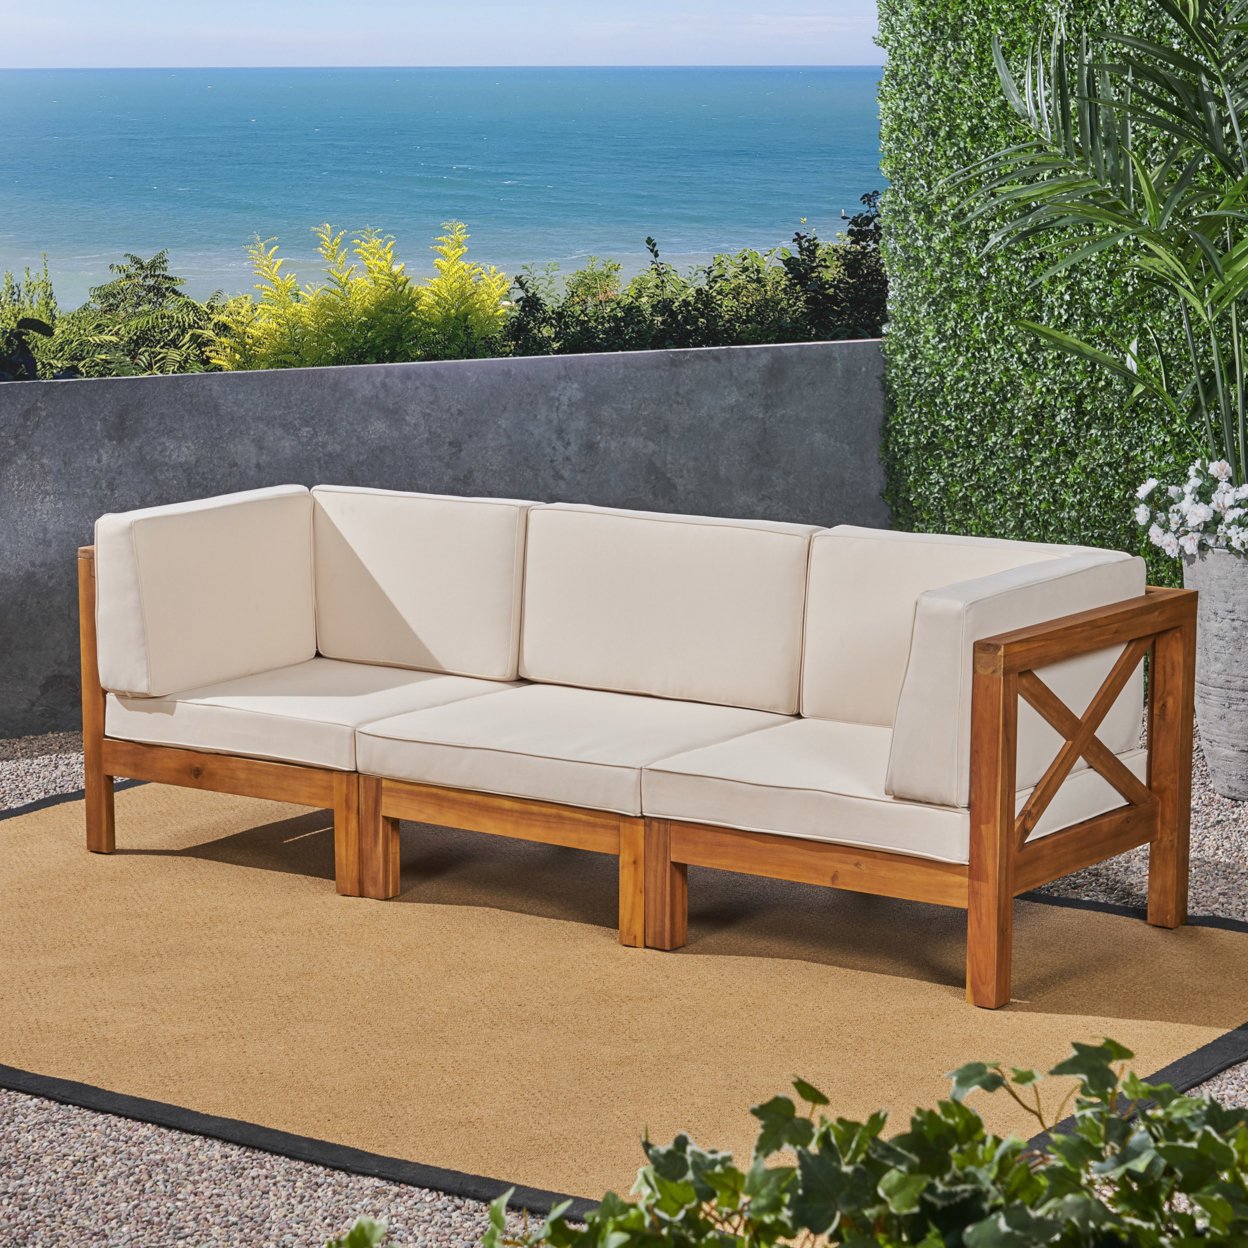 Brava Outdoor Modular Acacia Wood Sofa With Cushions - Teak Finish + Red